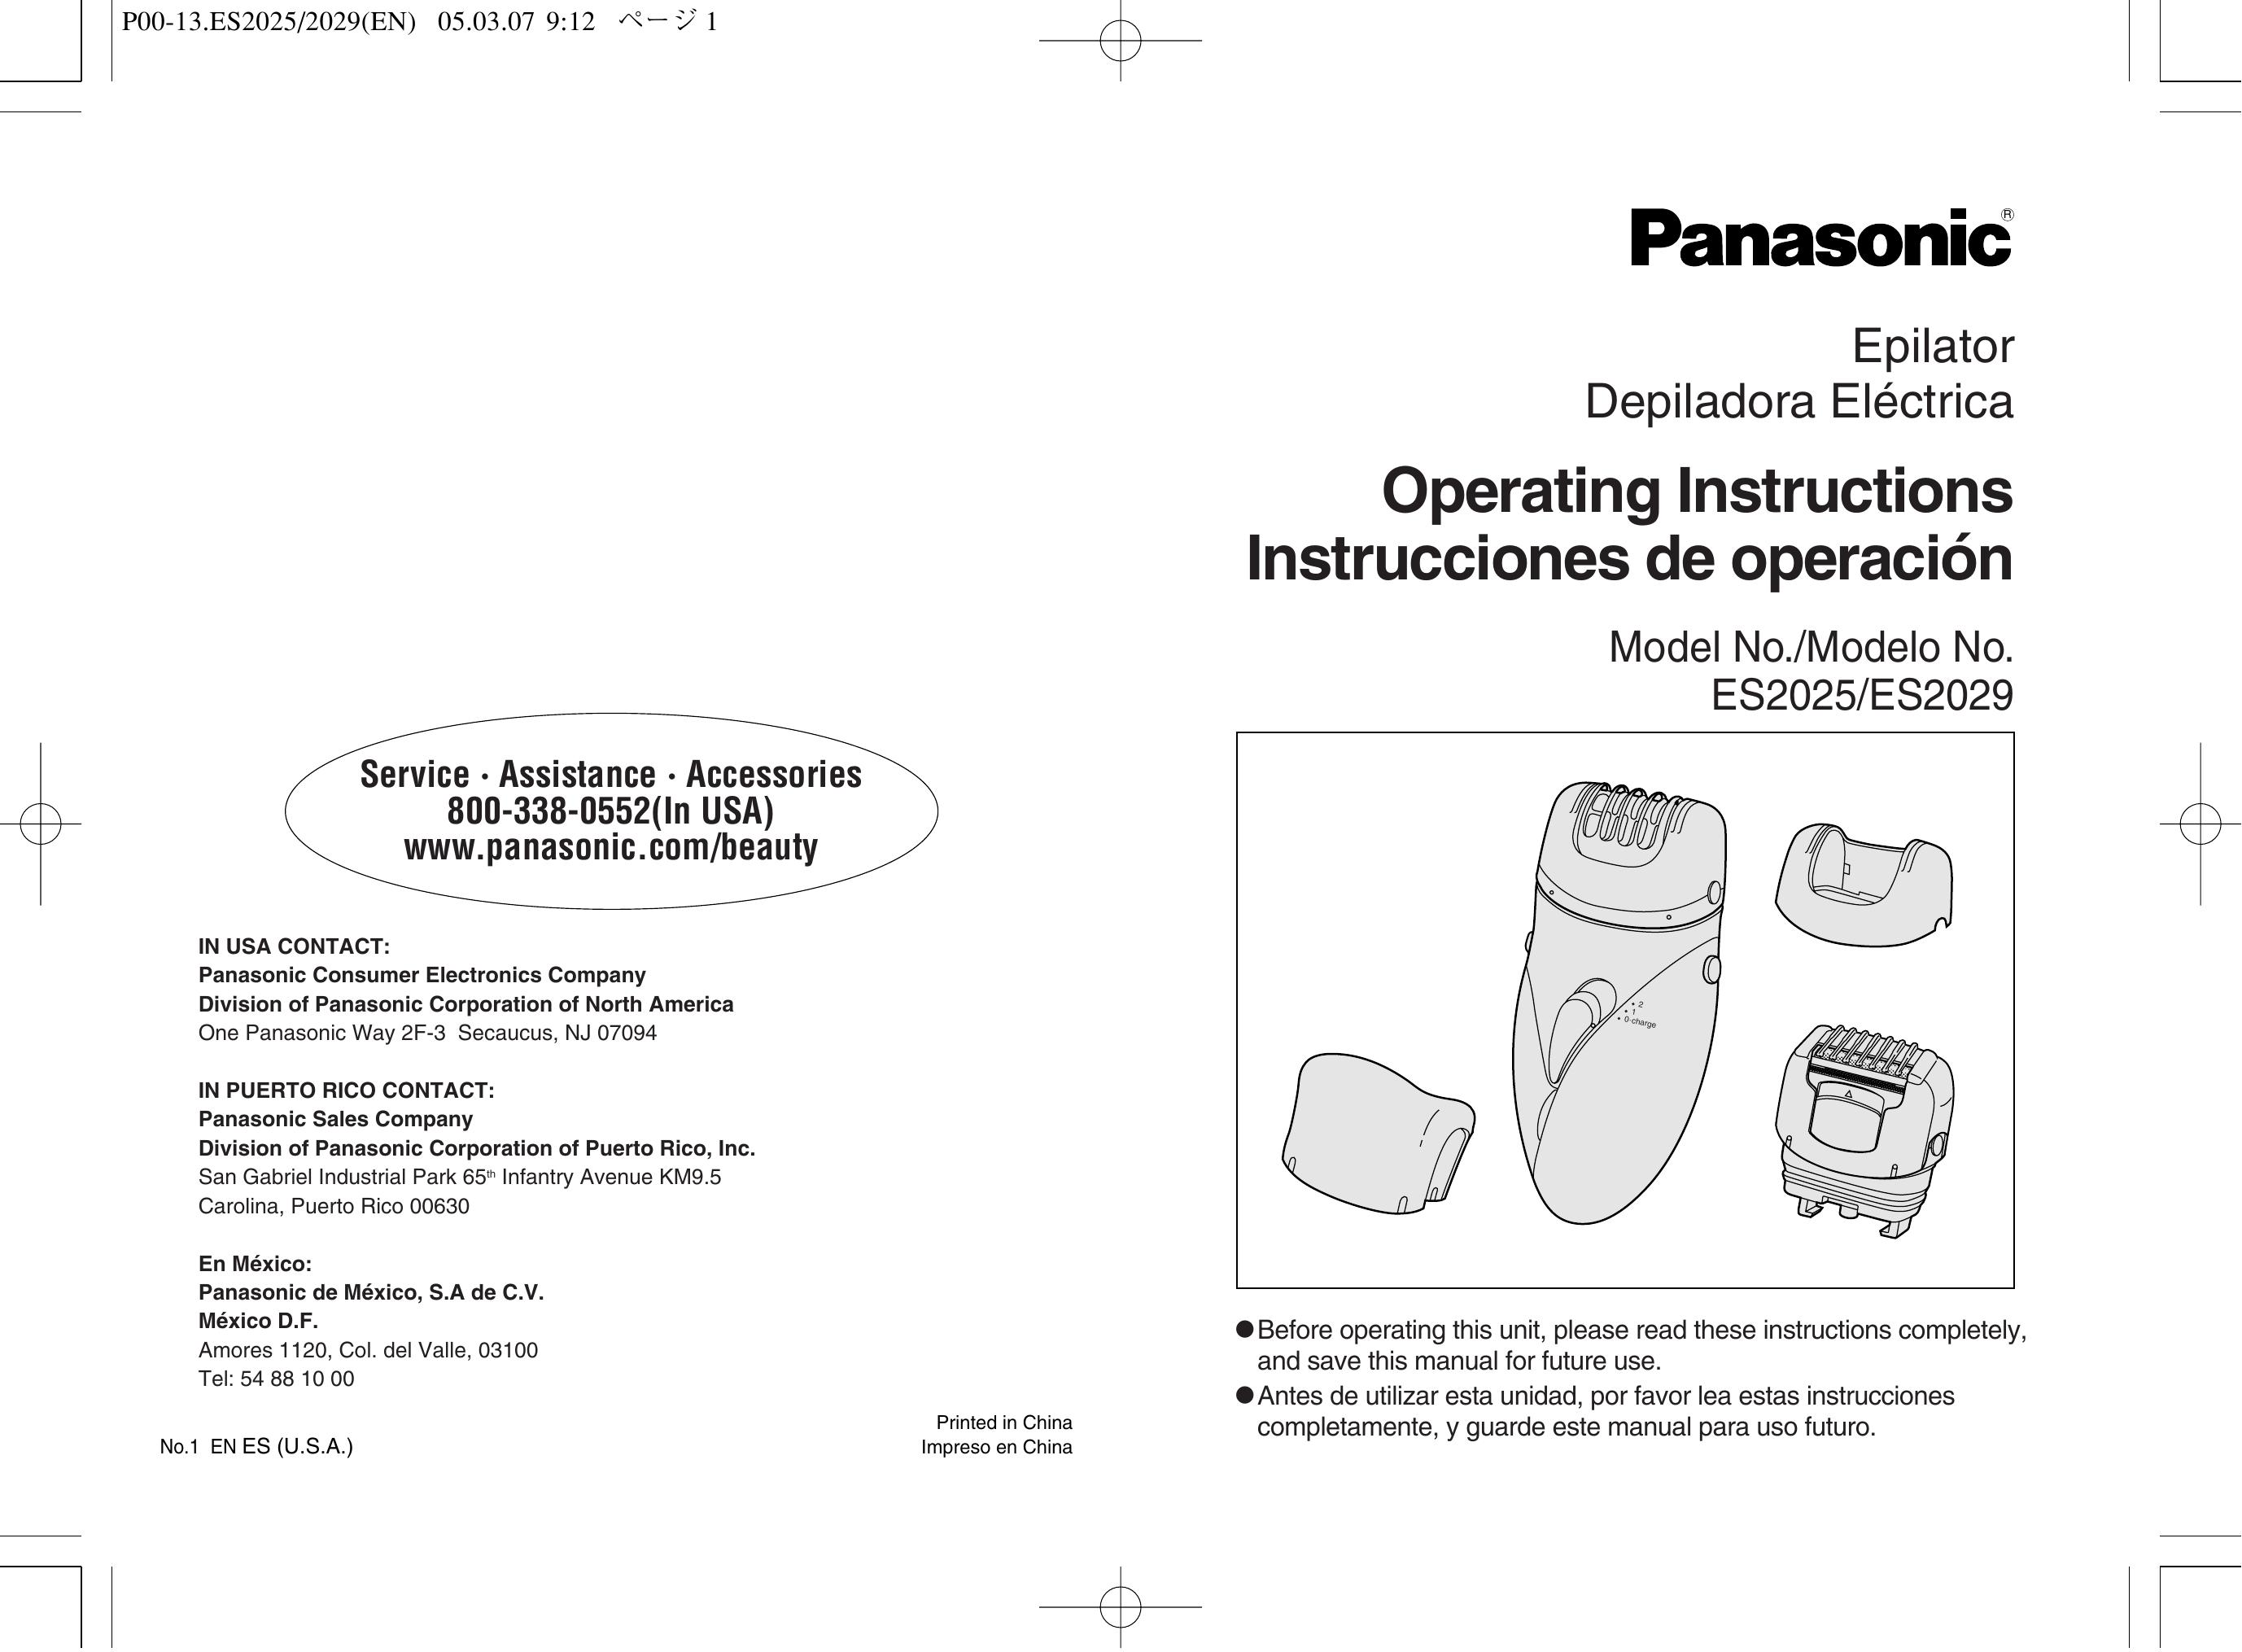 Panasonic ES2025 Electric Shaver User Manual